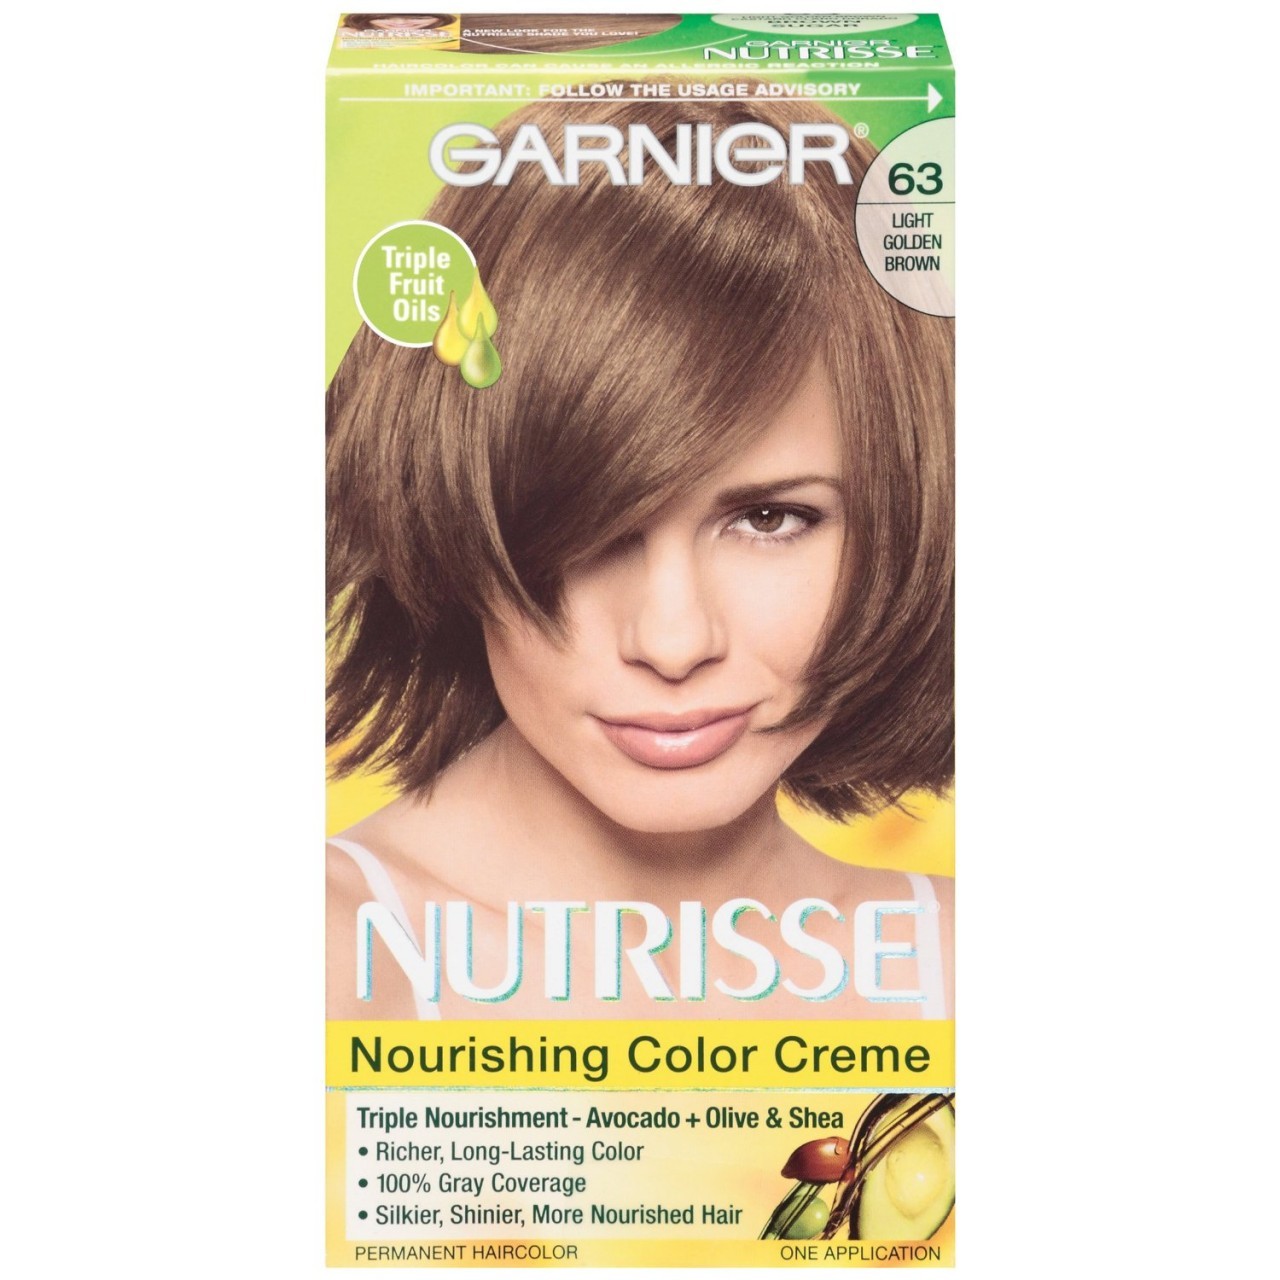 Garnier Nutrisse, Nourishing Color Creme with Triple Fruit Oil, (63) Light Golden Brown Hair Color